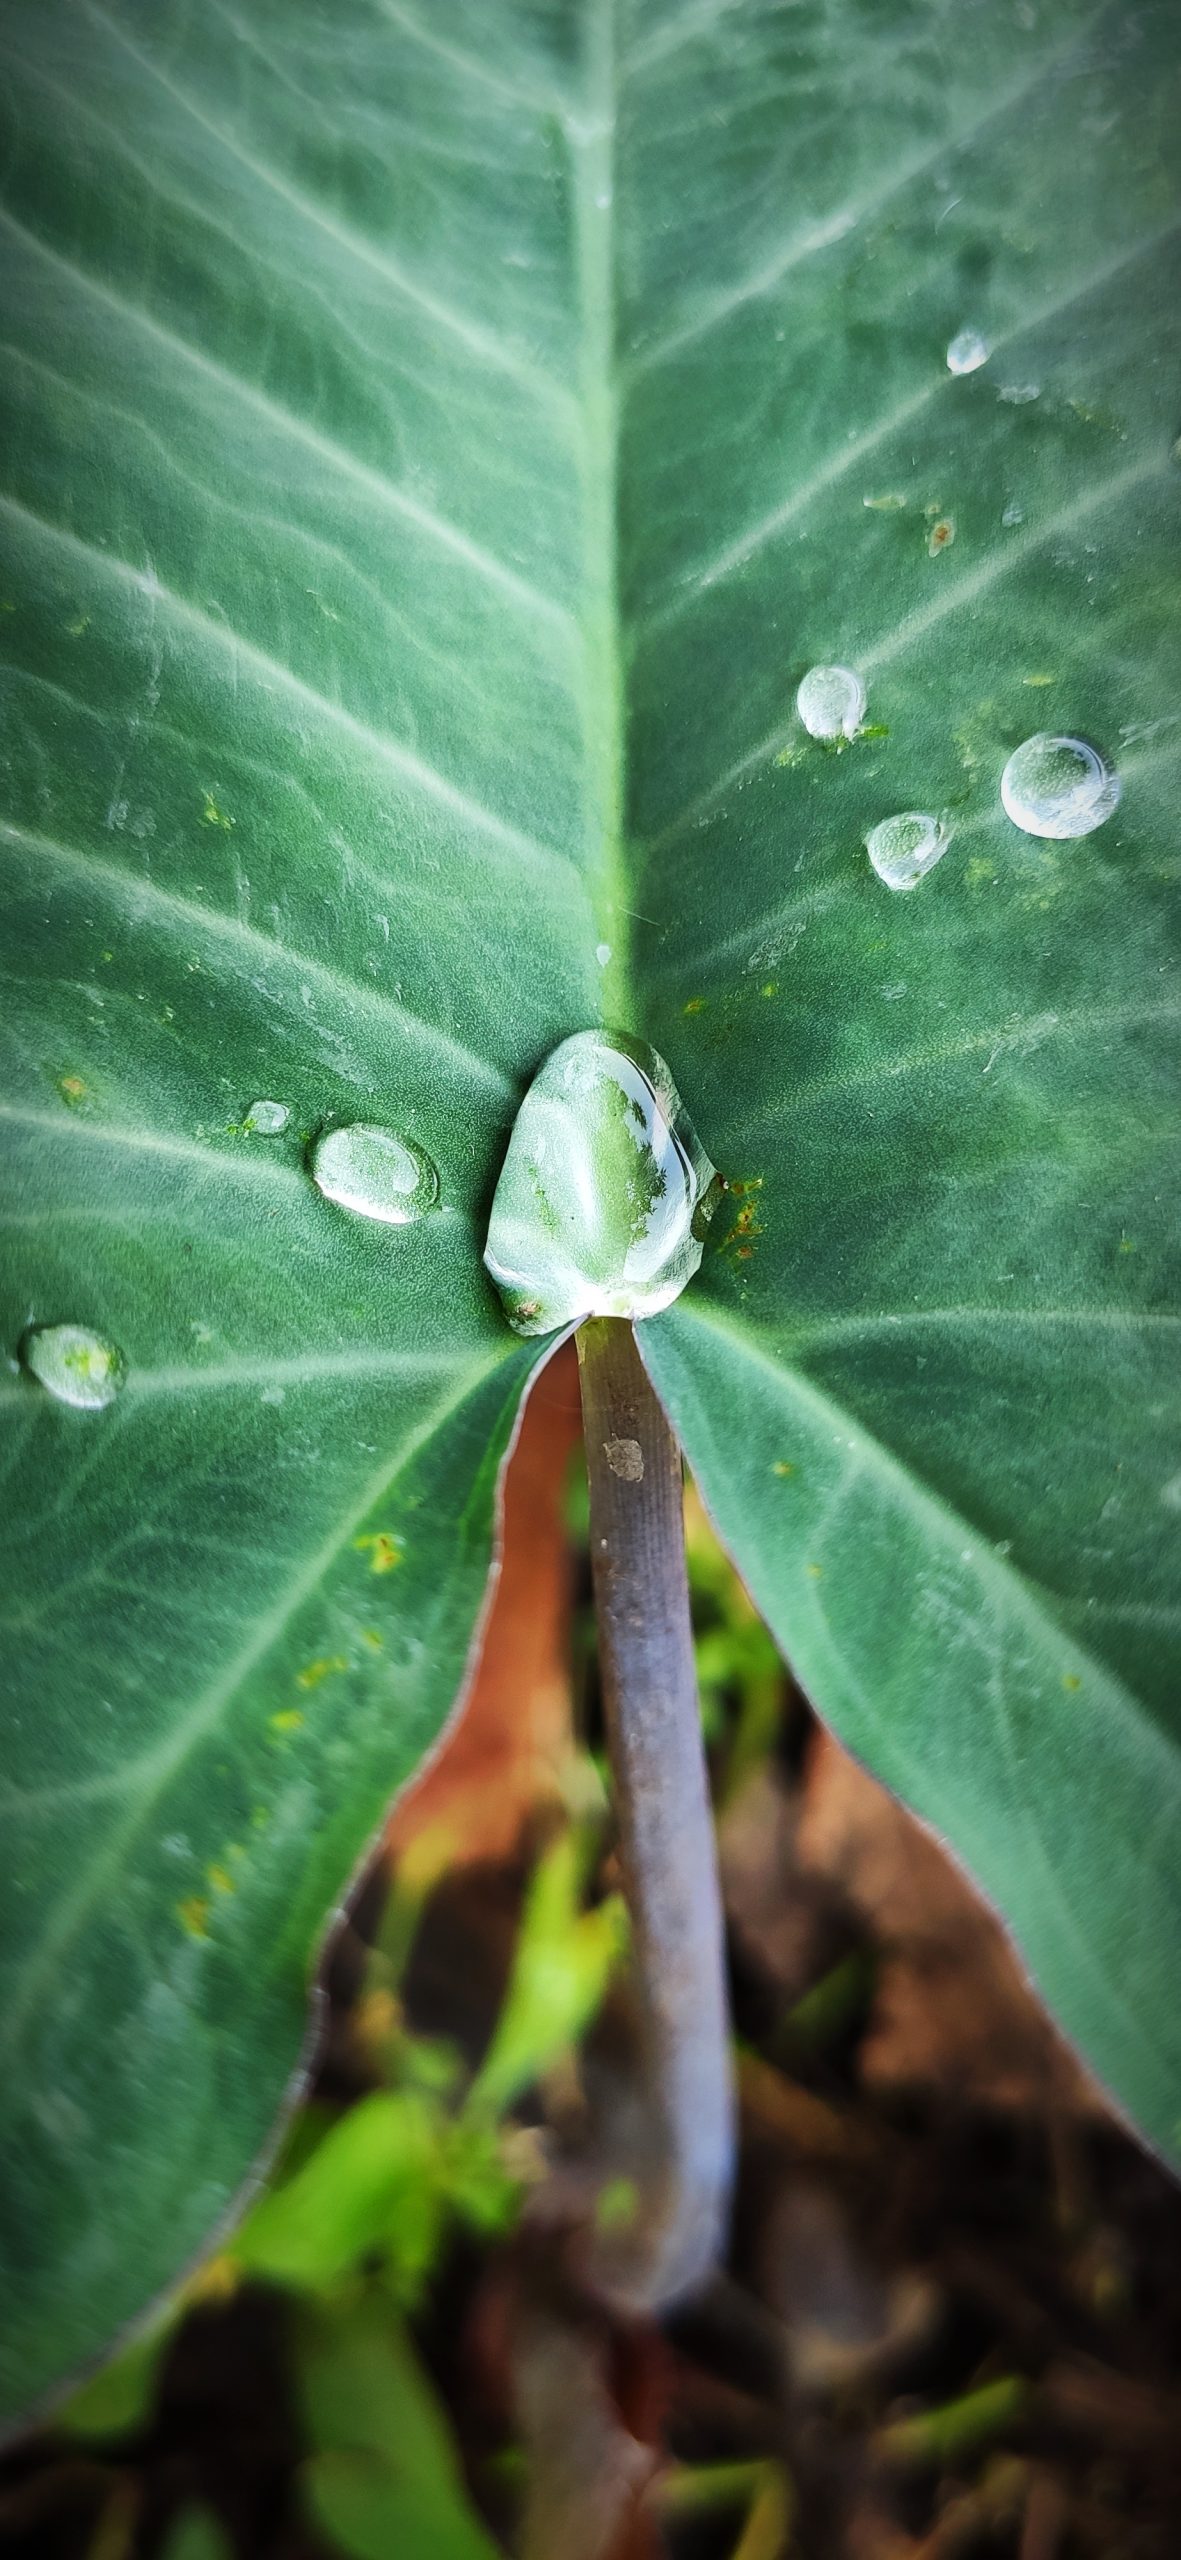 Drop on leaf